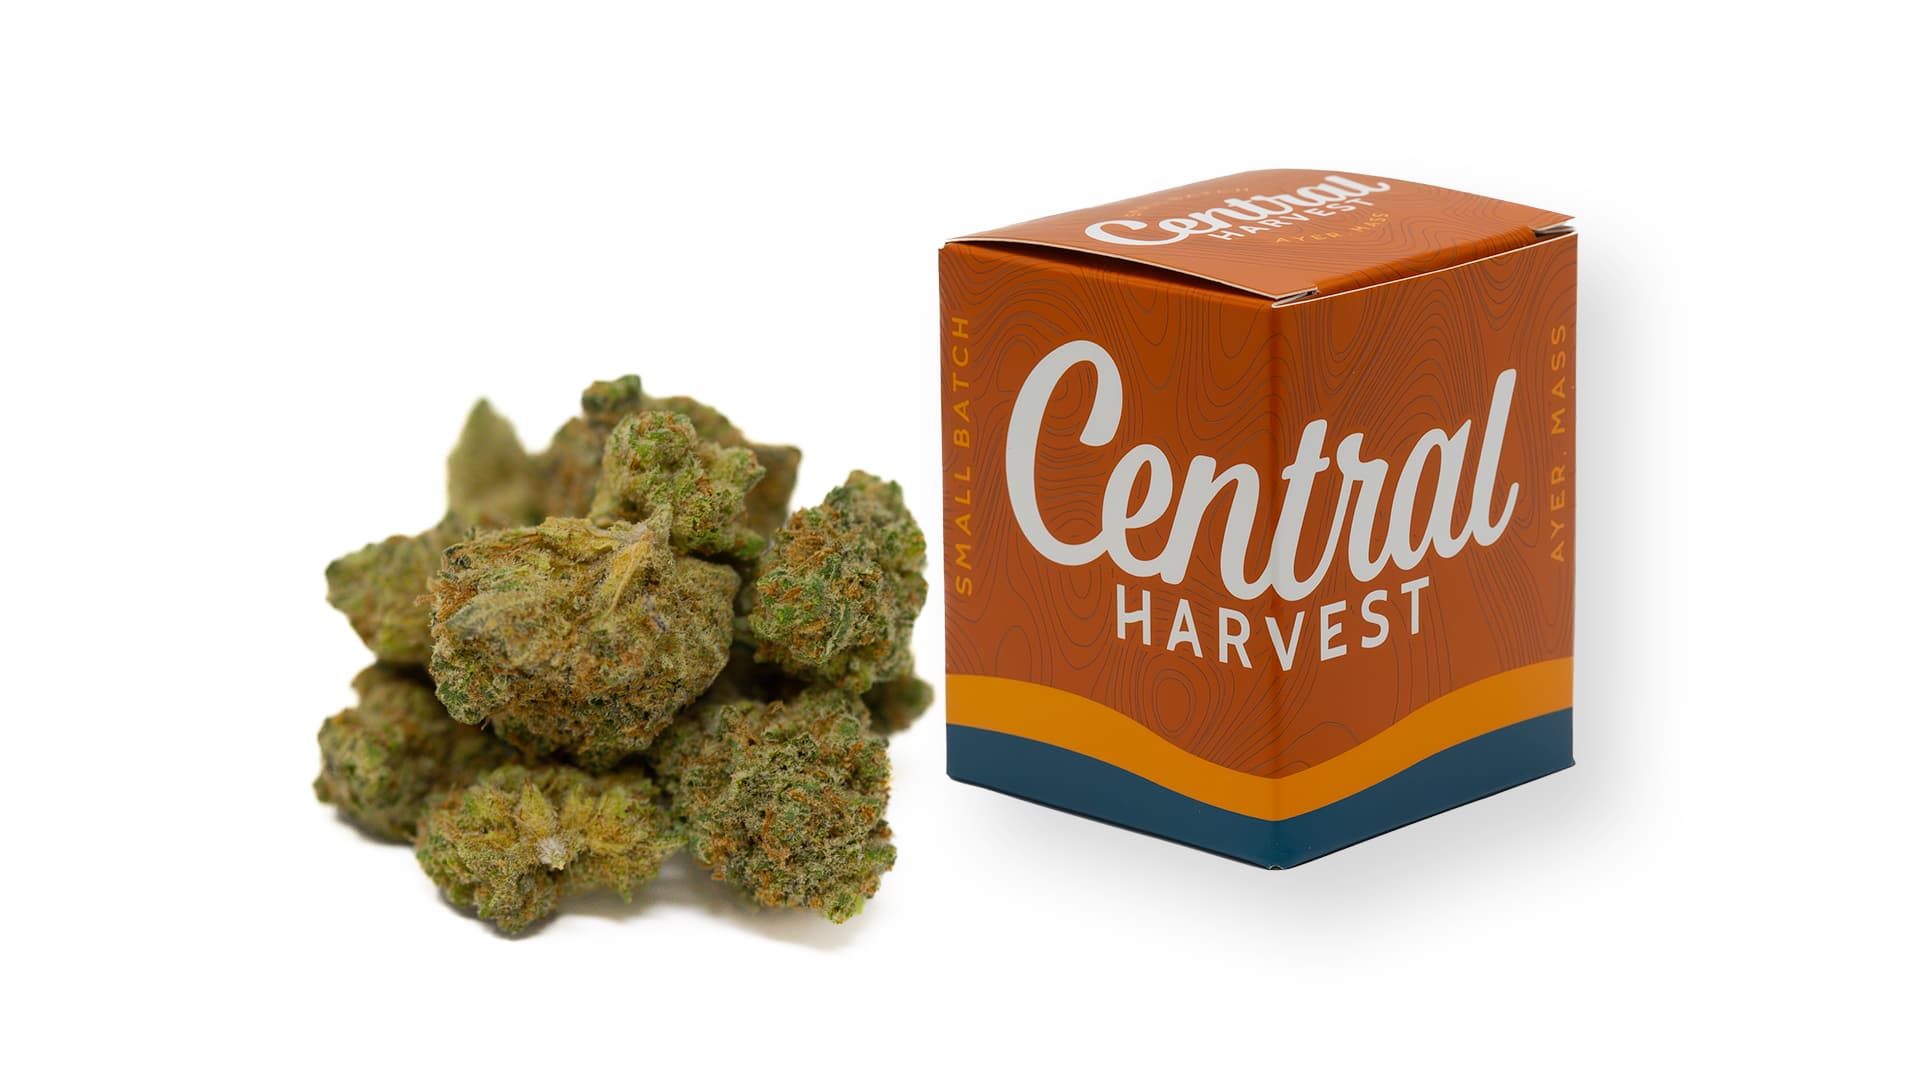 Ethos Apex F1 is a Hybrid Cannabis strain grown by Central Harvest